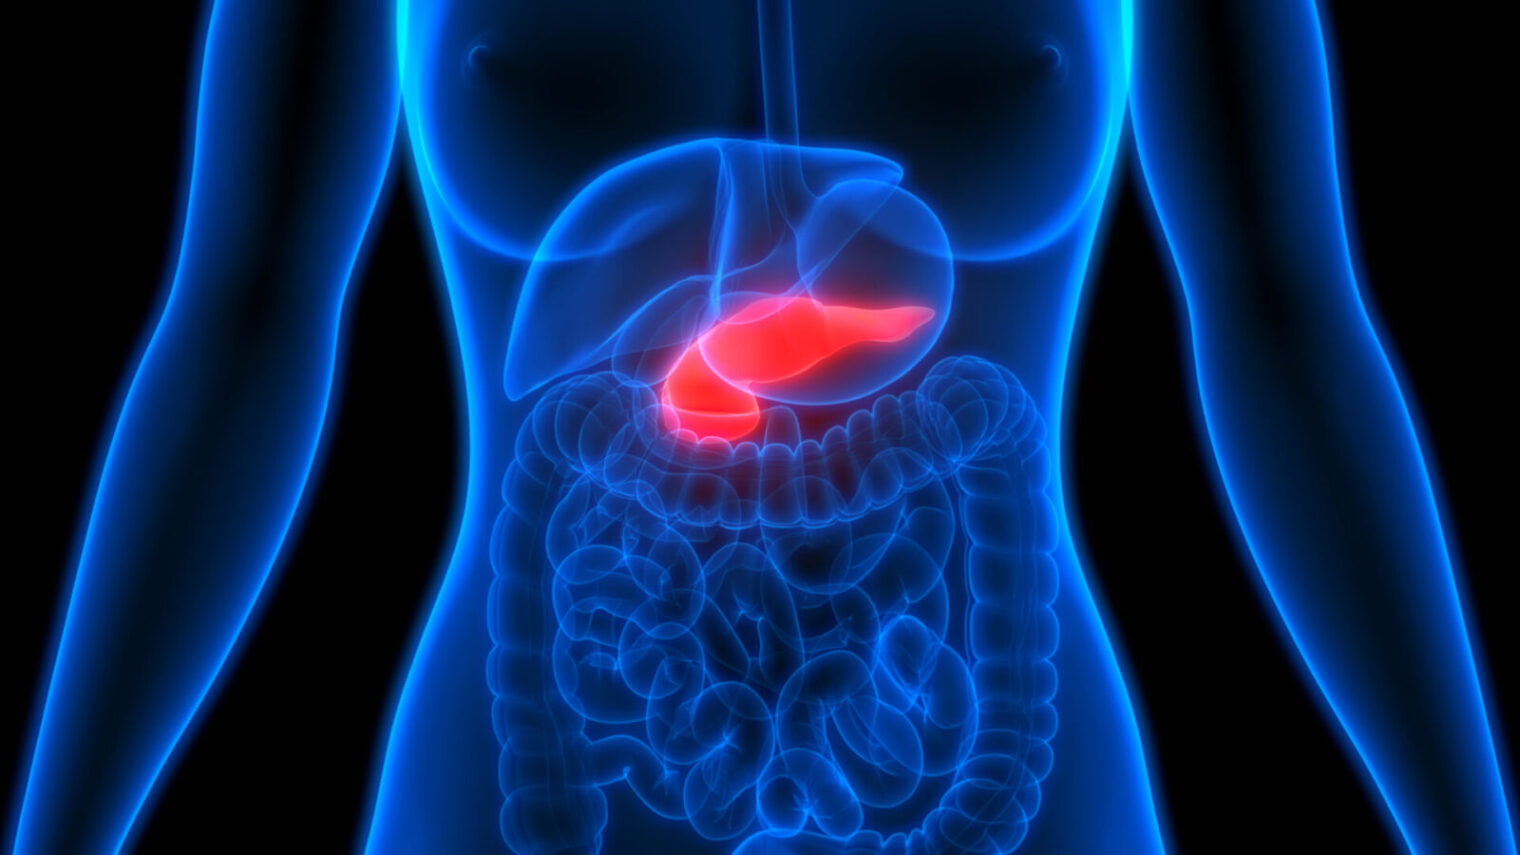 Illustration of pancreas by Magic Mine via Shutterstock.com